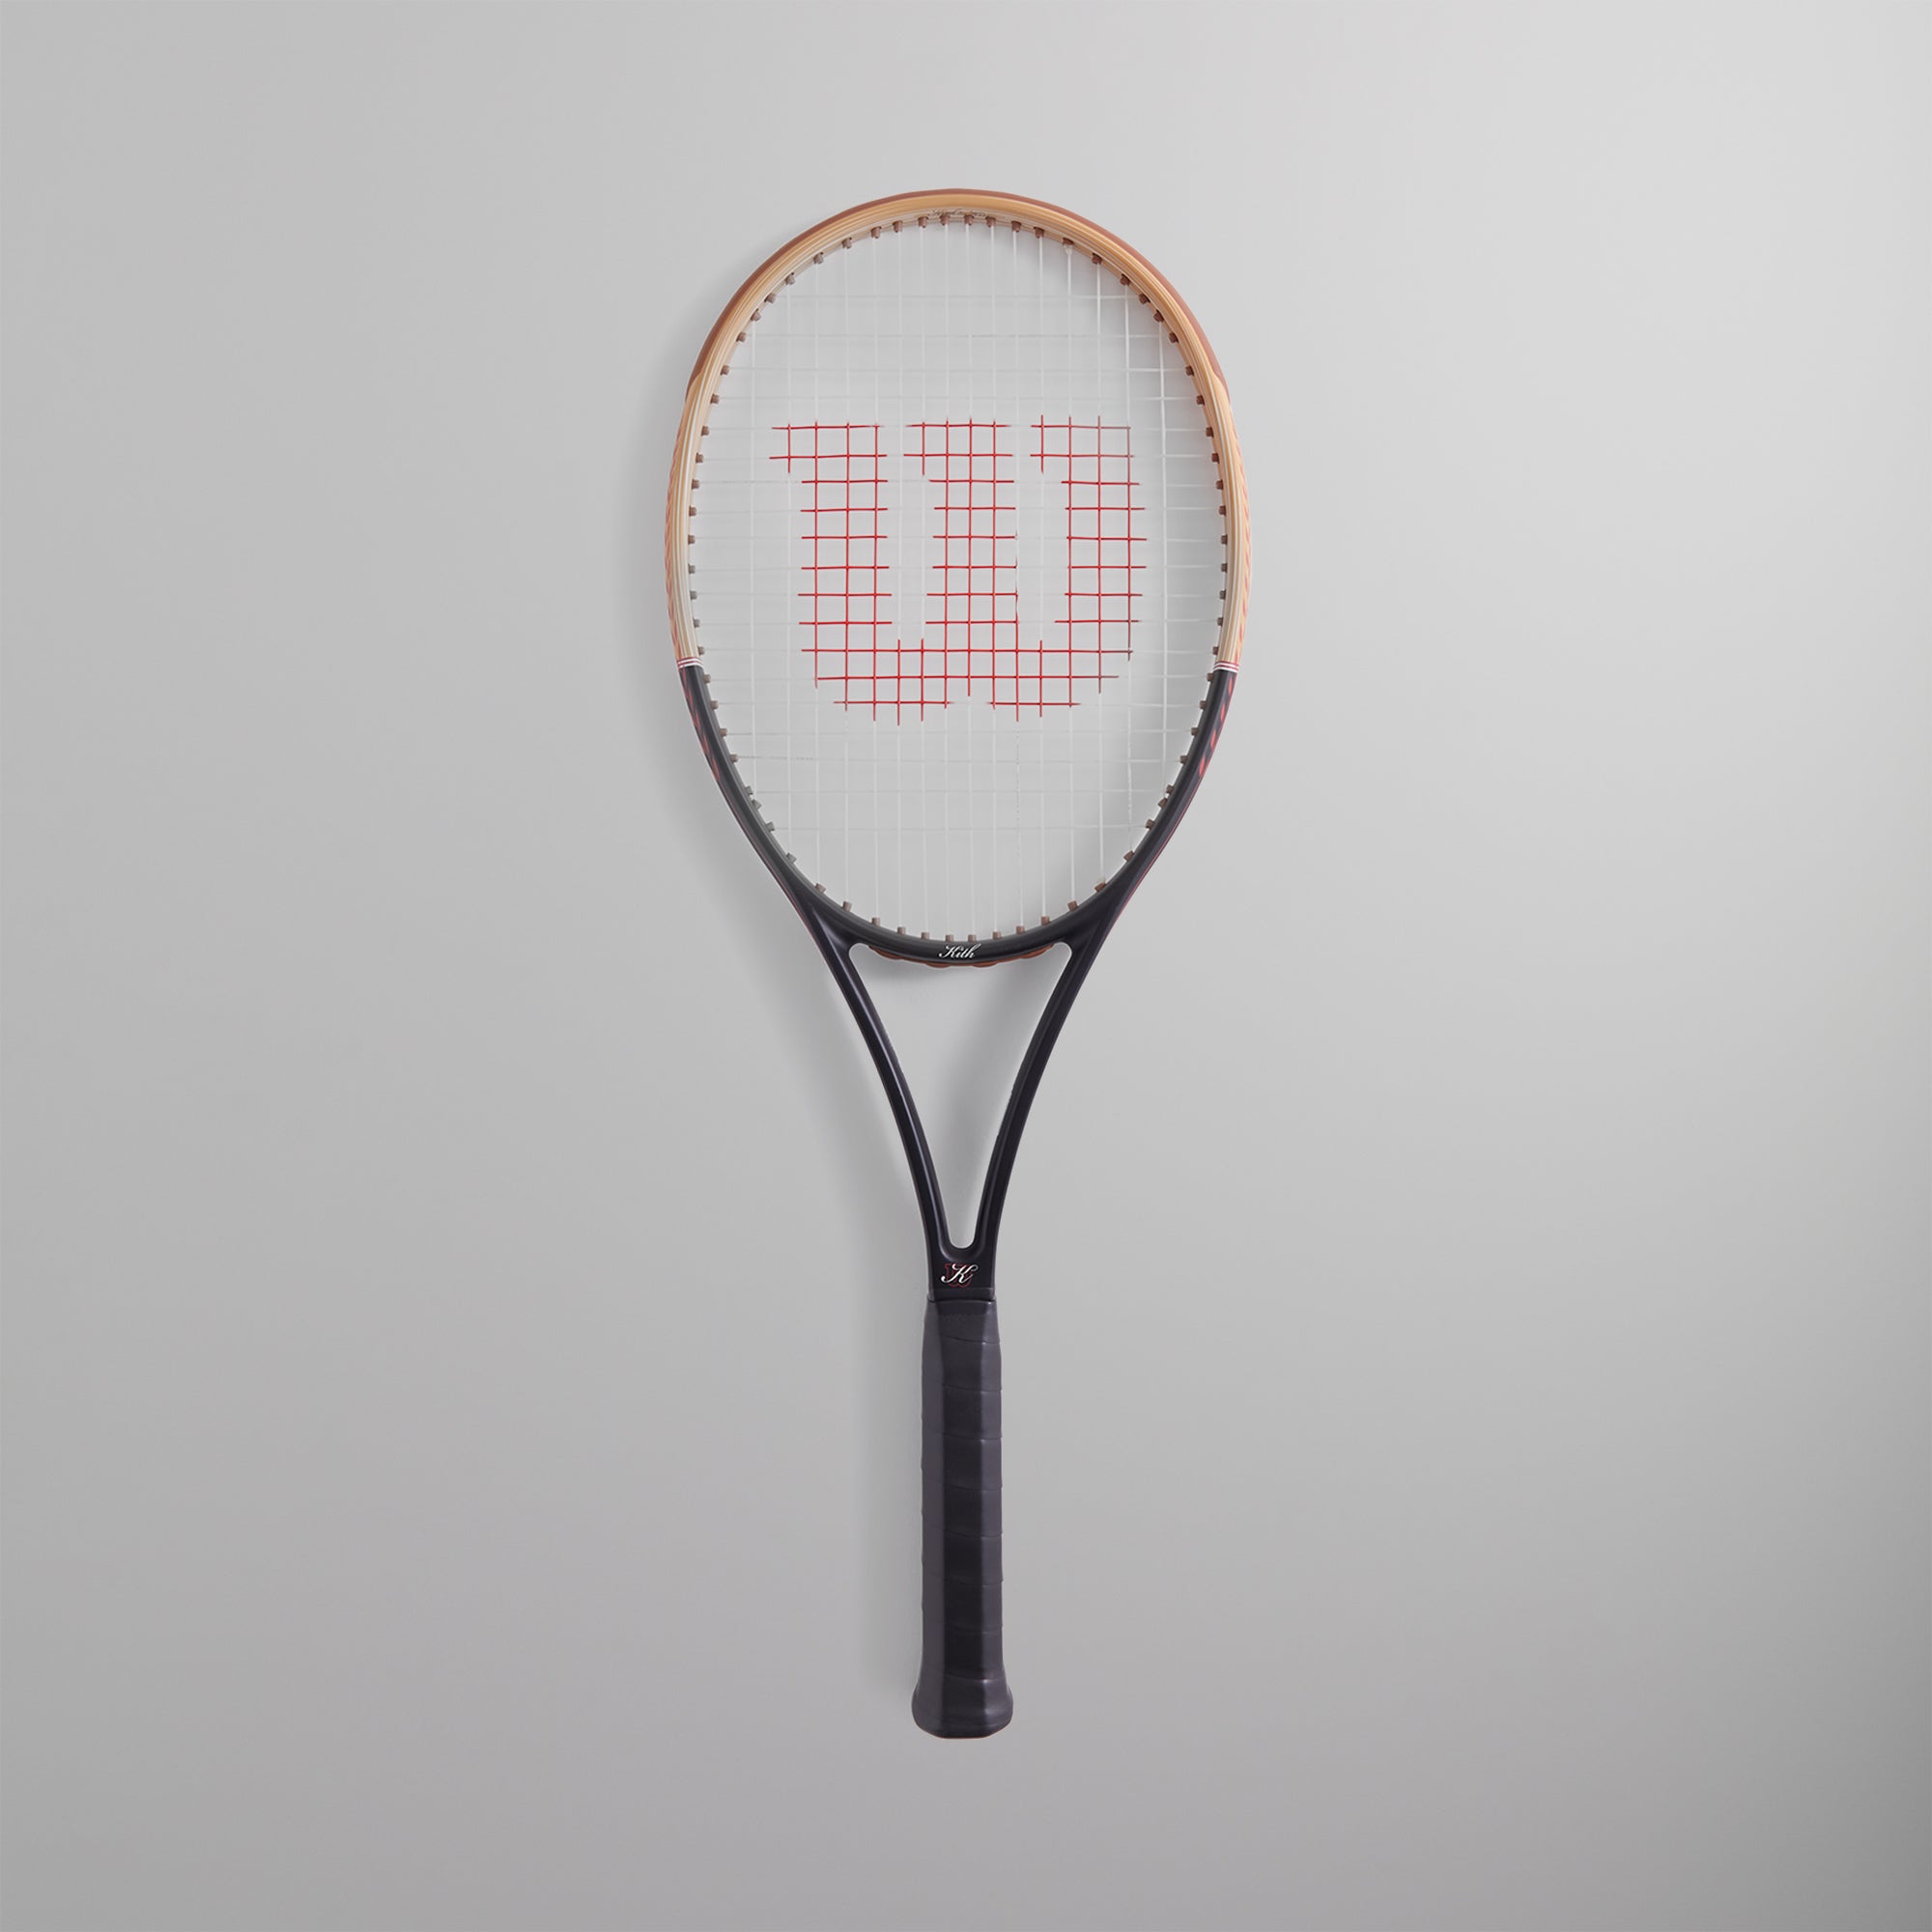 Kith for Wilson Tennis Racket Blade 98 V8 (16x19)